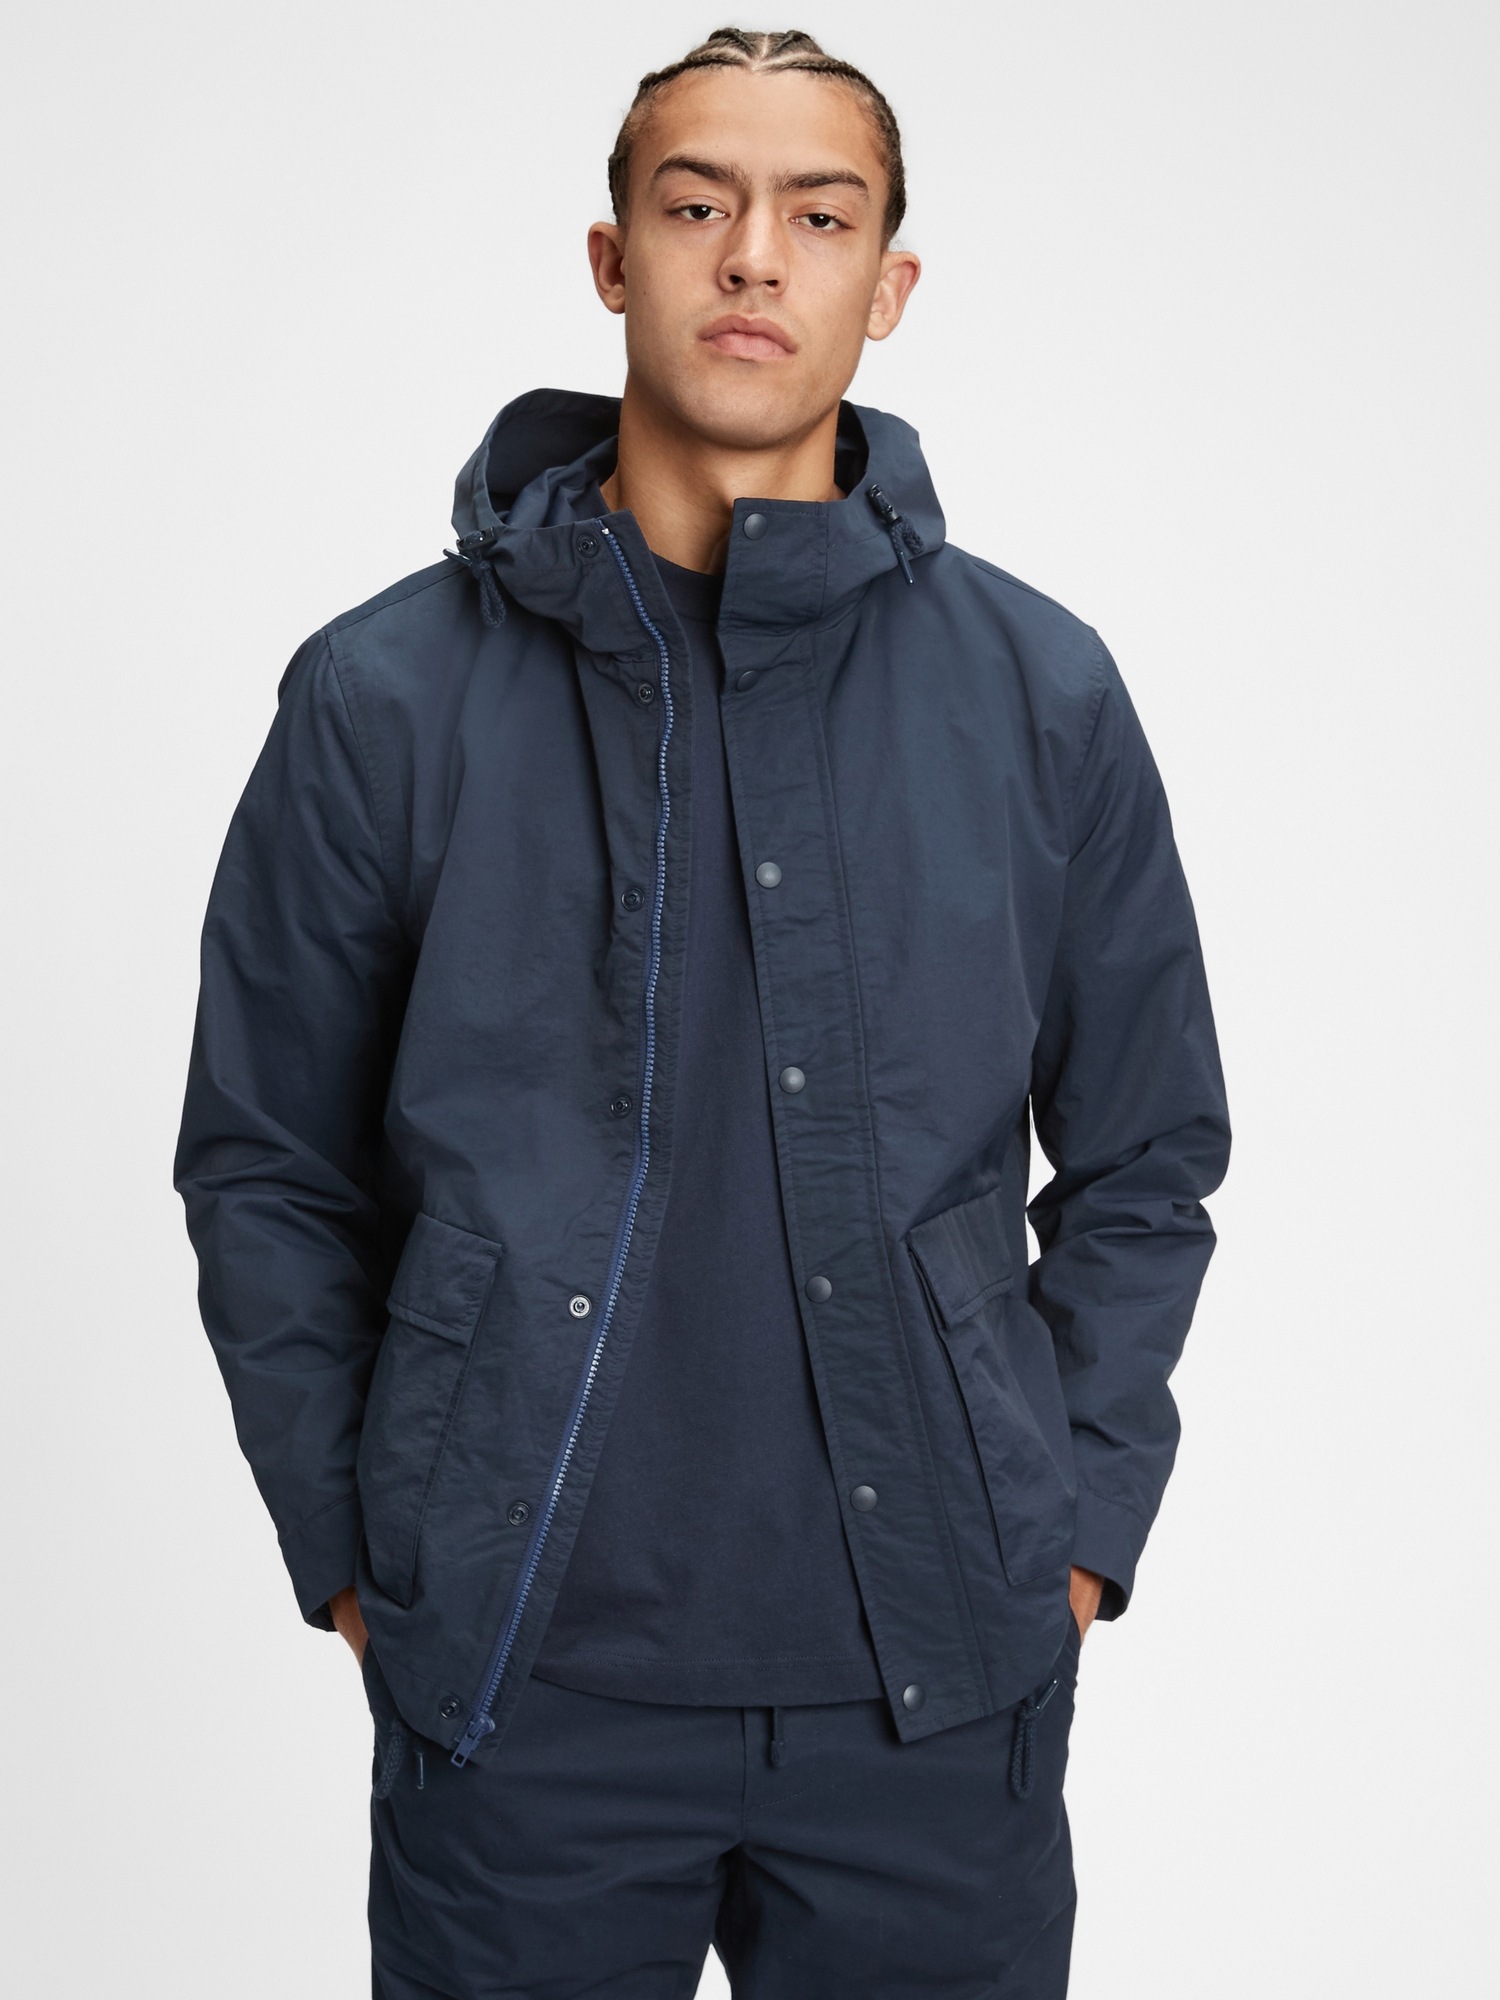 90's GAP nylon anorak jacket / size S #gap #anorak #fashion